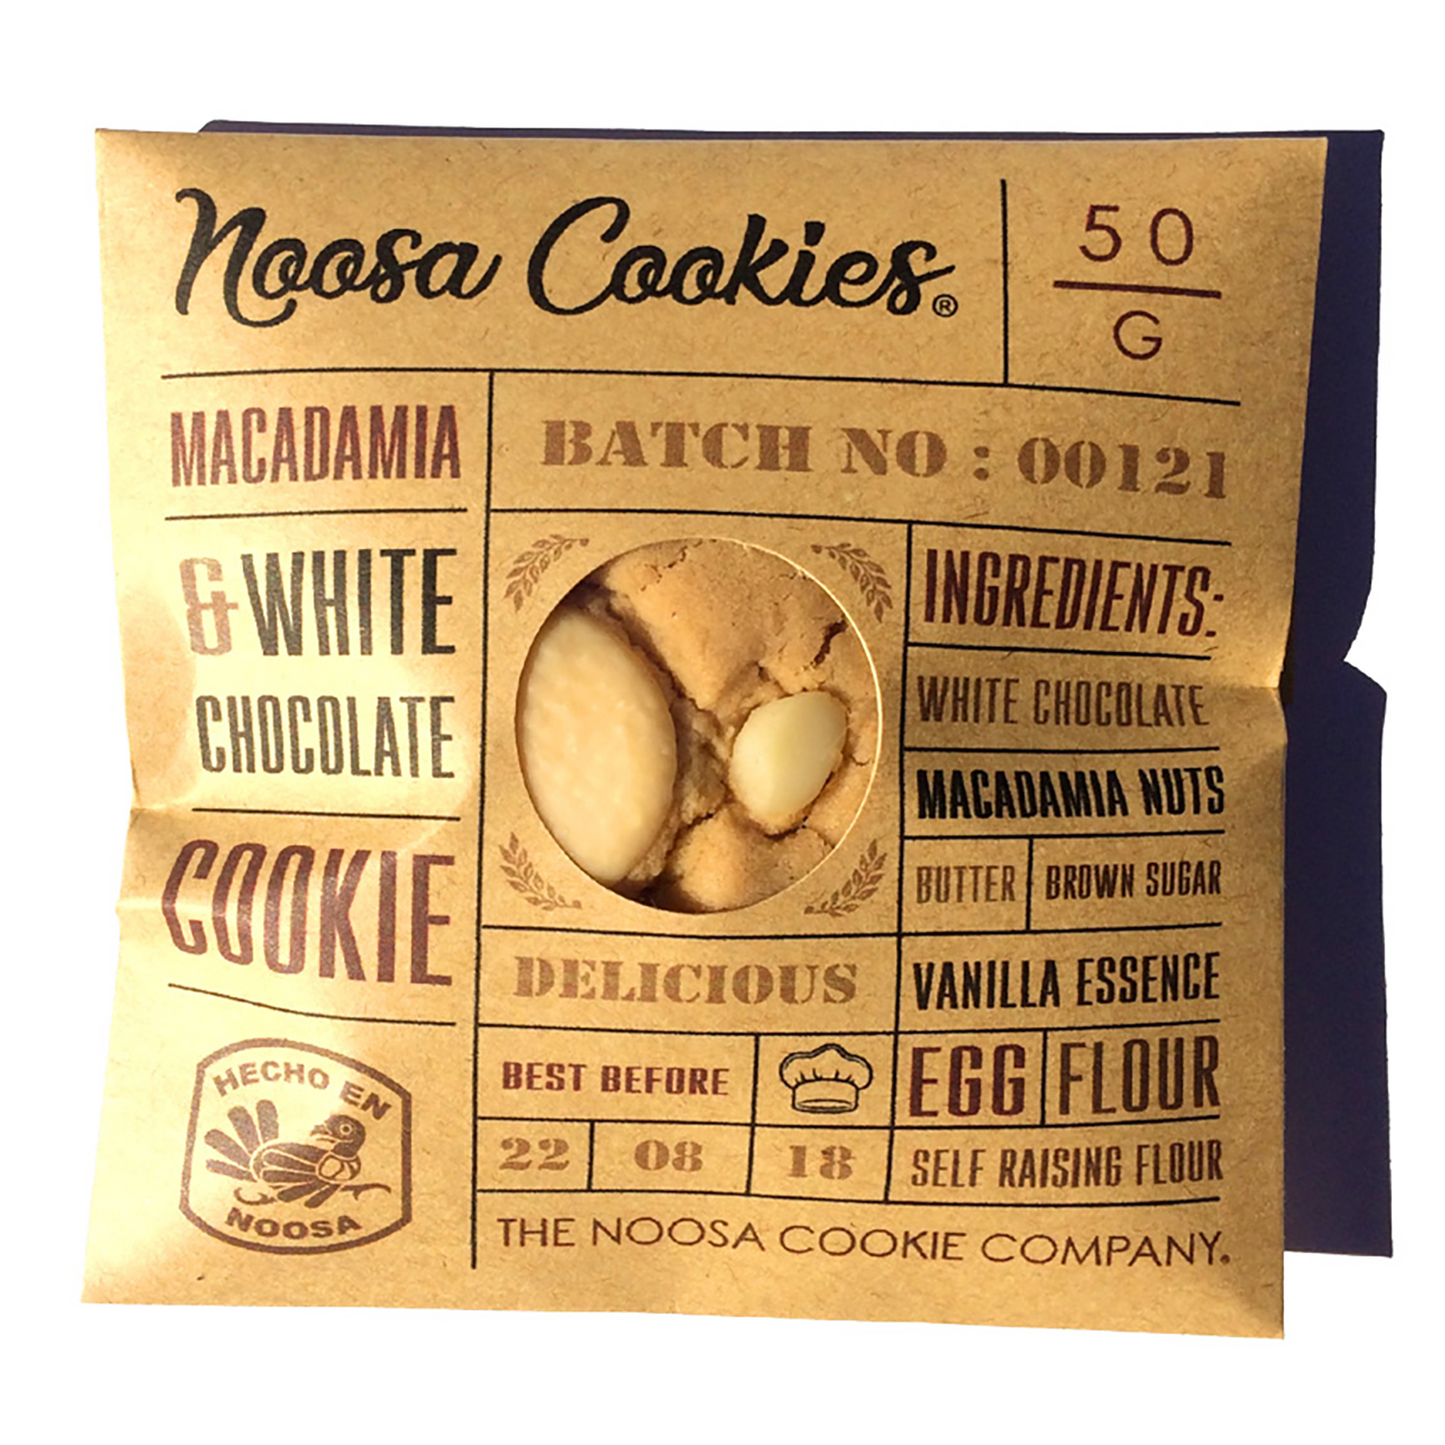 NOOSA COOKIES ® - MACADAMIA & WHITE CHOCOLATE / 50g